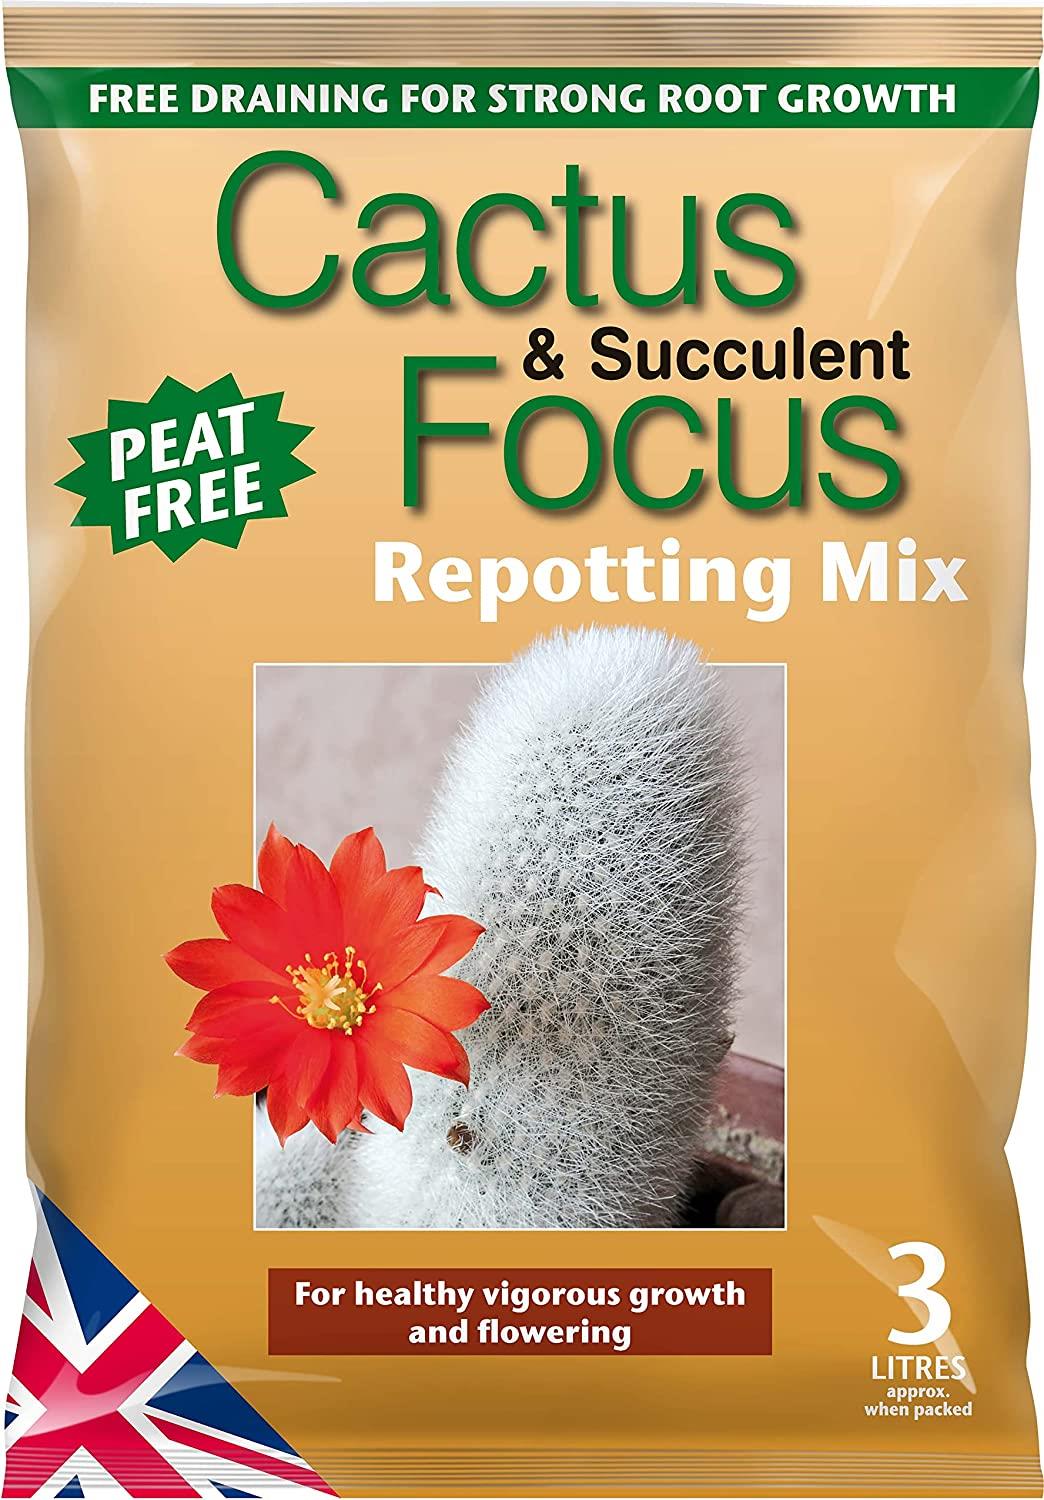 Growth Technology Cactus Focus Repotting Mix